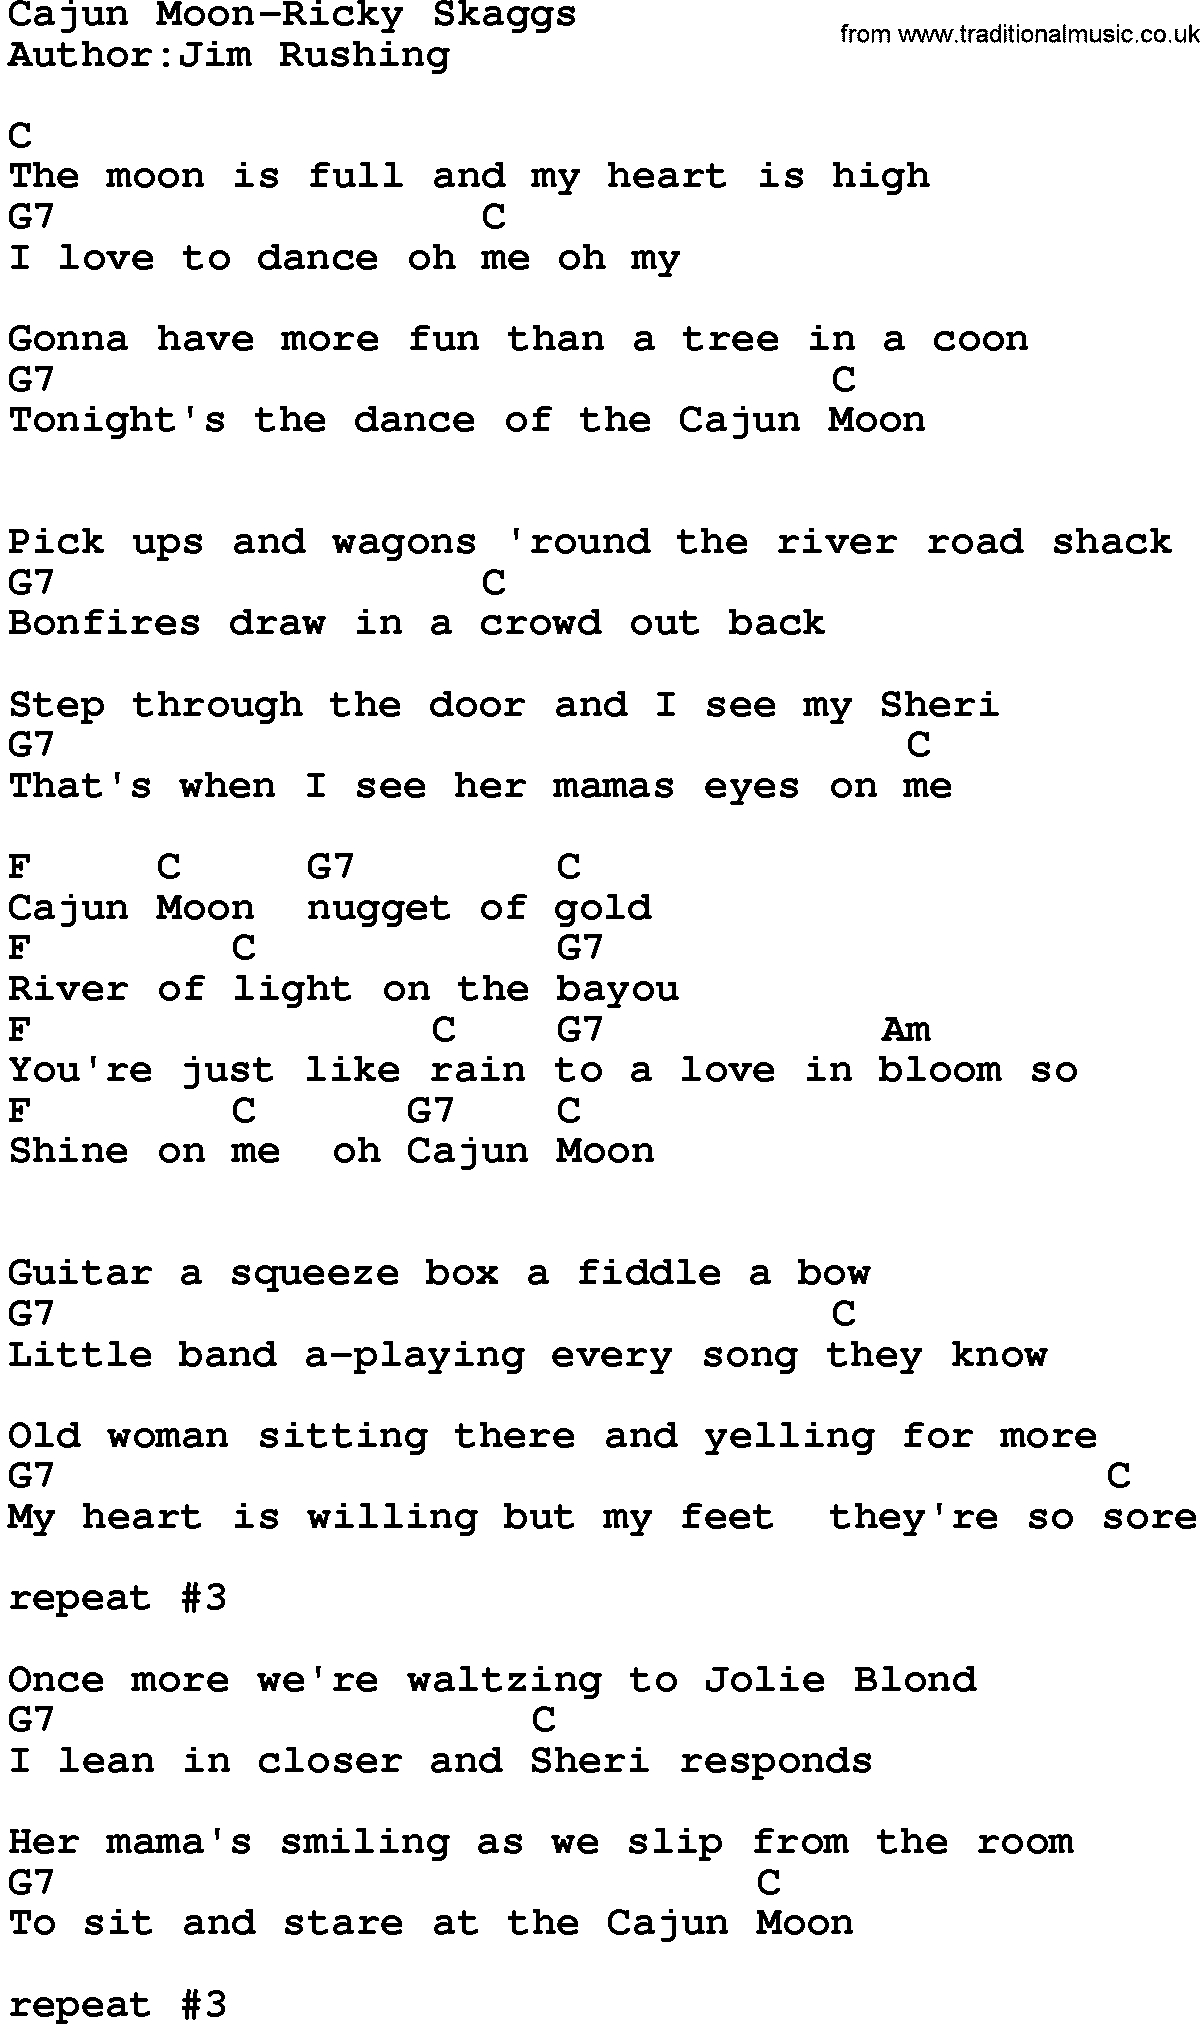 Country music song: Cajun Moon-Ricky Skaggs lyrics and chords